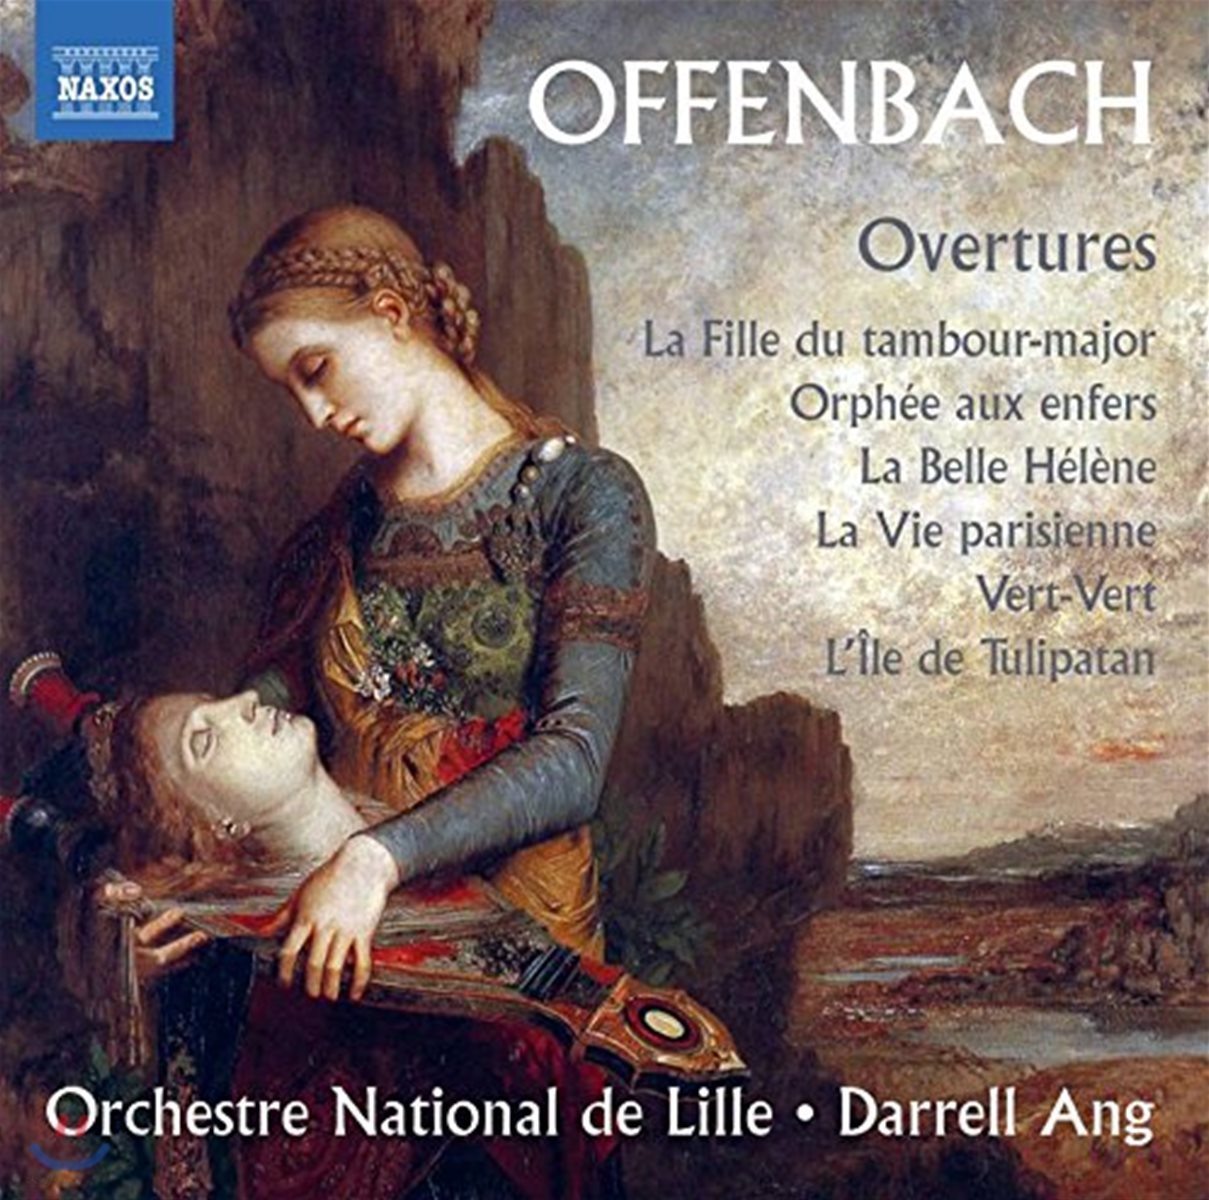 Darrell Ang 오펜바흐: 서곡 모음집 - 지옥의 오르페우스, 아름다운 엘렌, 파리의 생활 외 (Offenbach: Overtures)